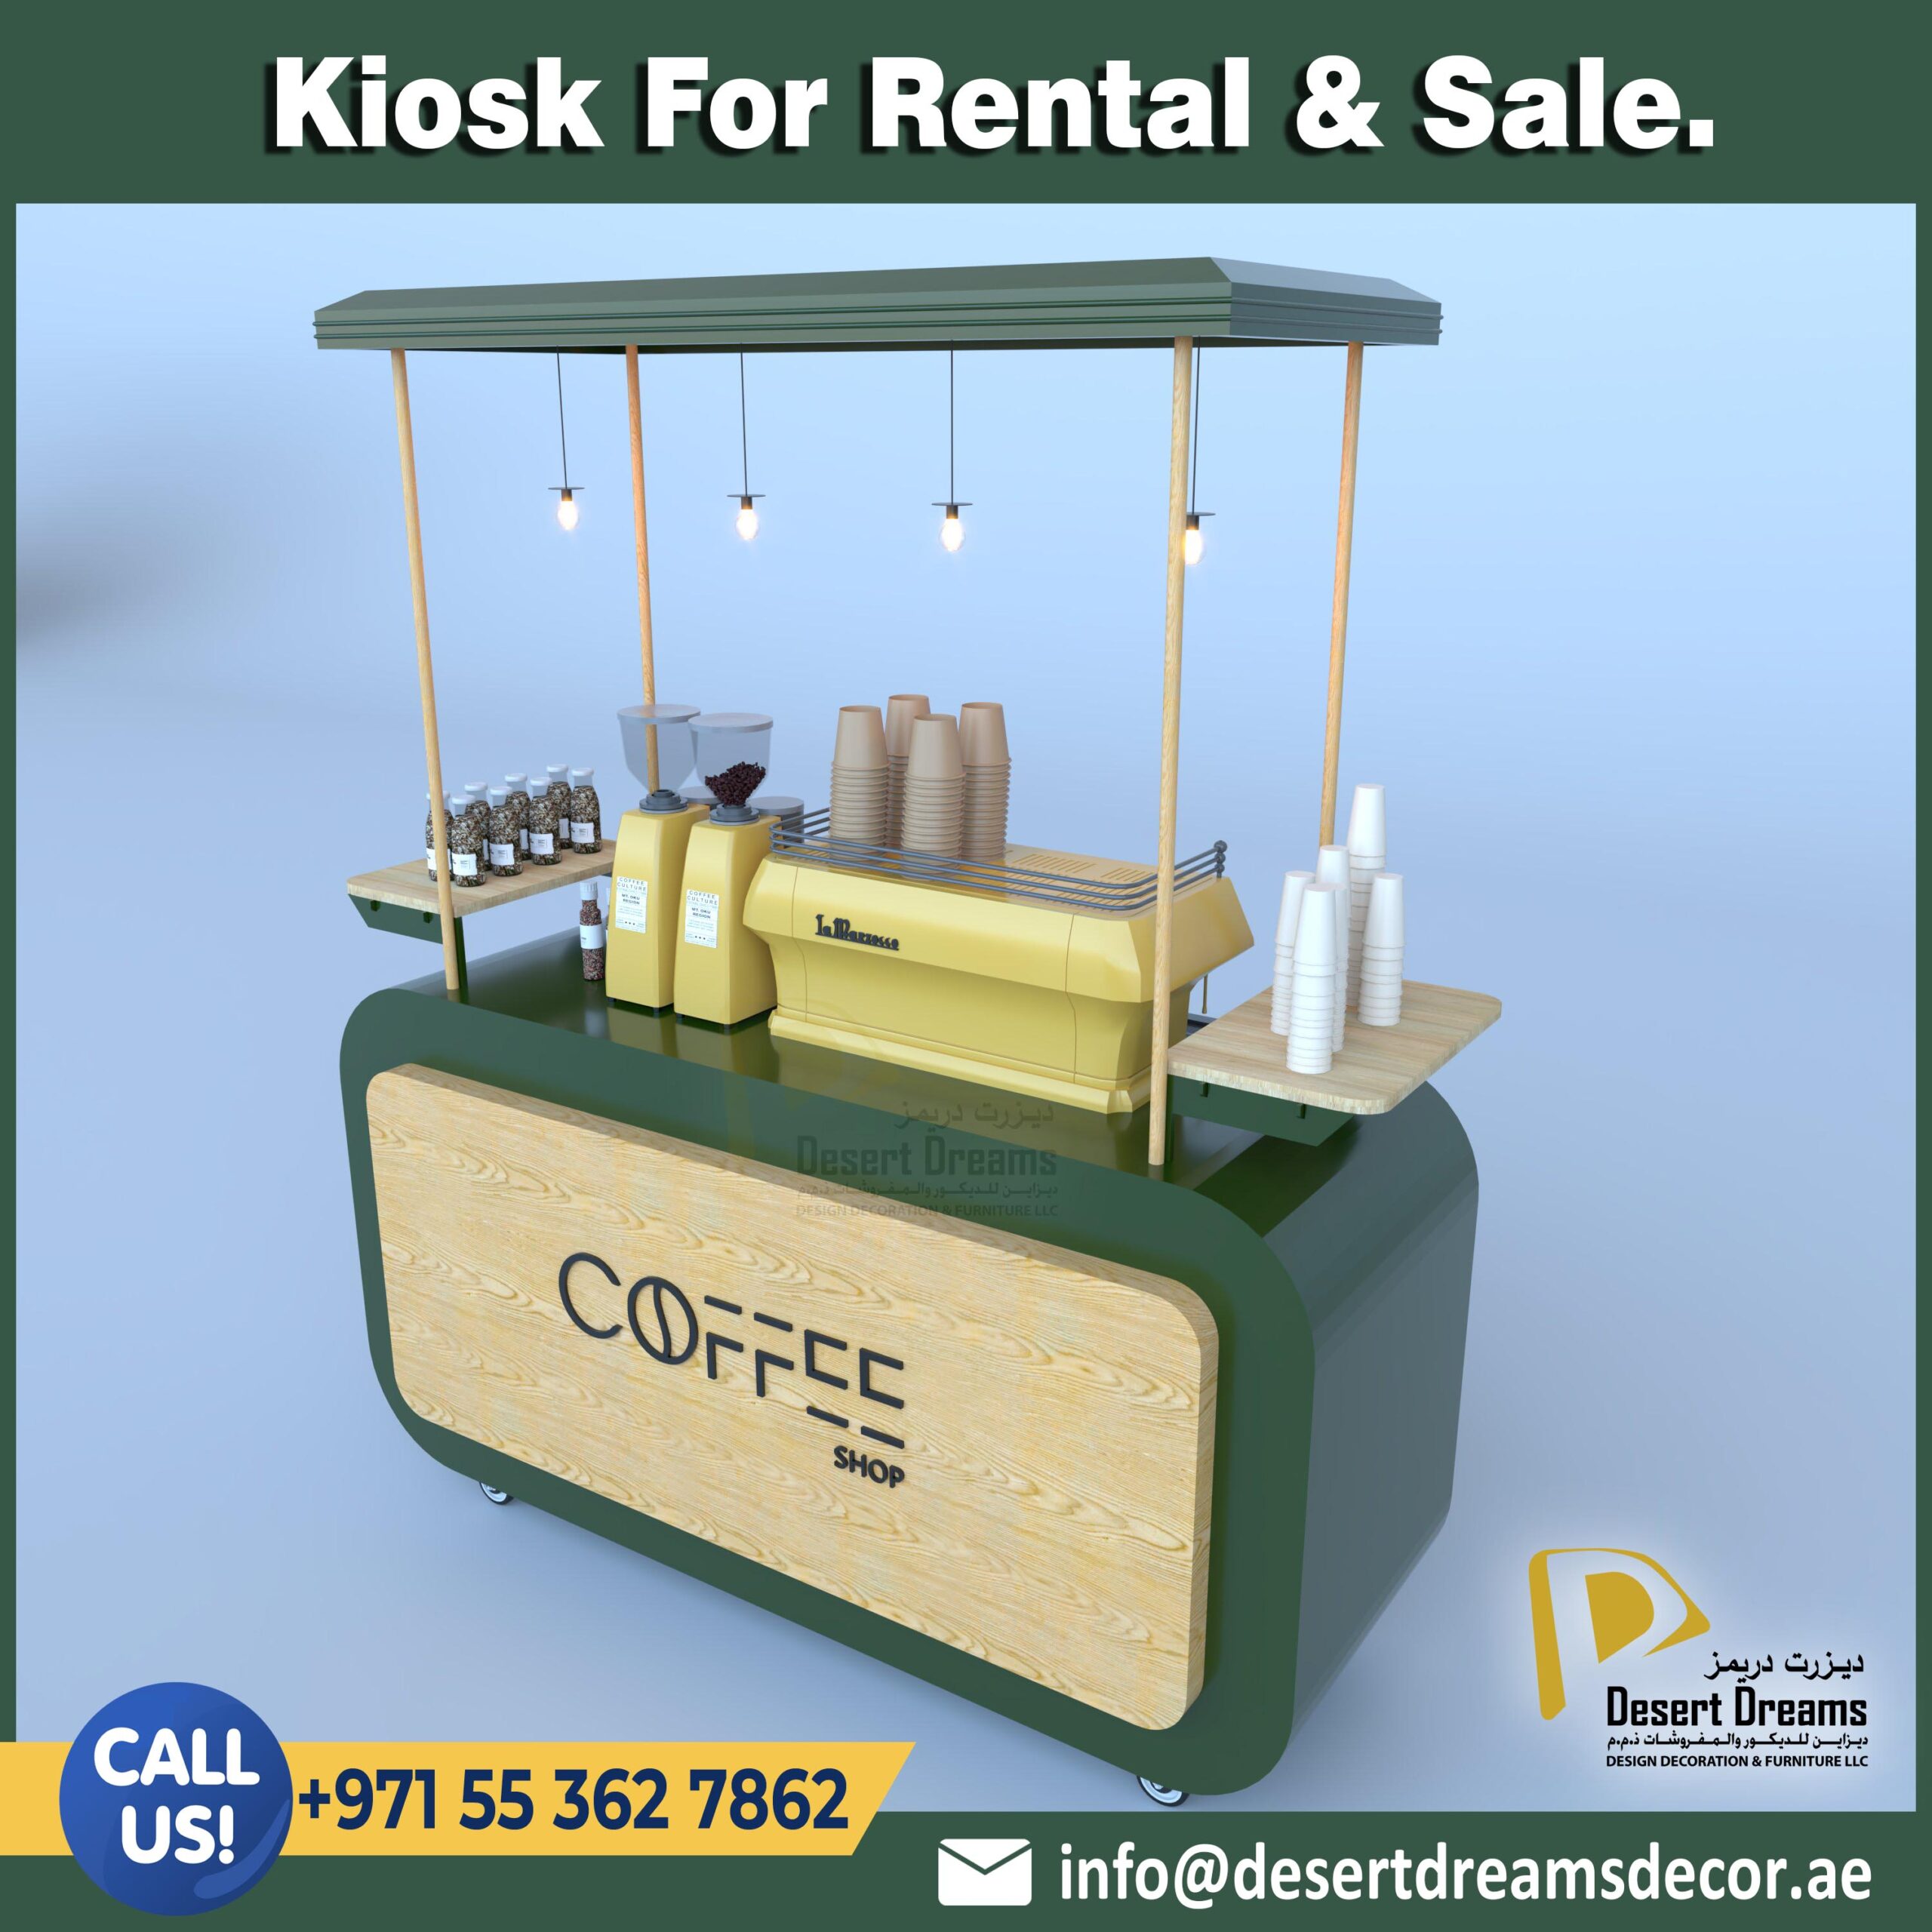 Kiosk for Rental and Sale in UAE (1).jpg